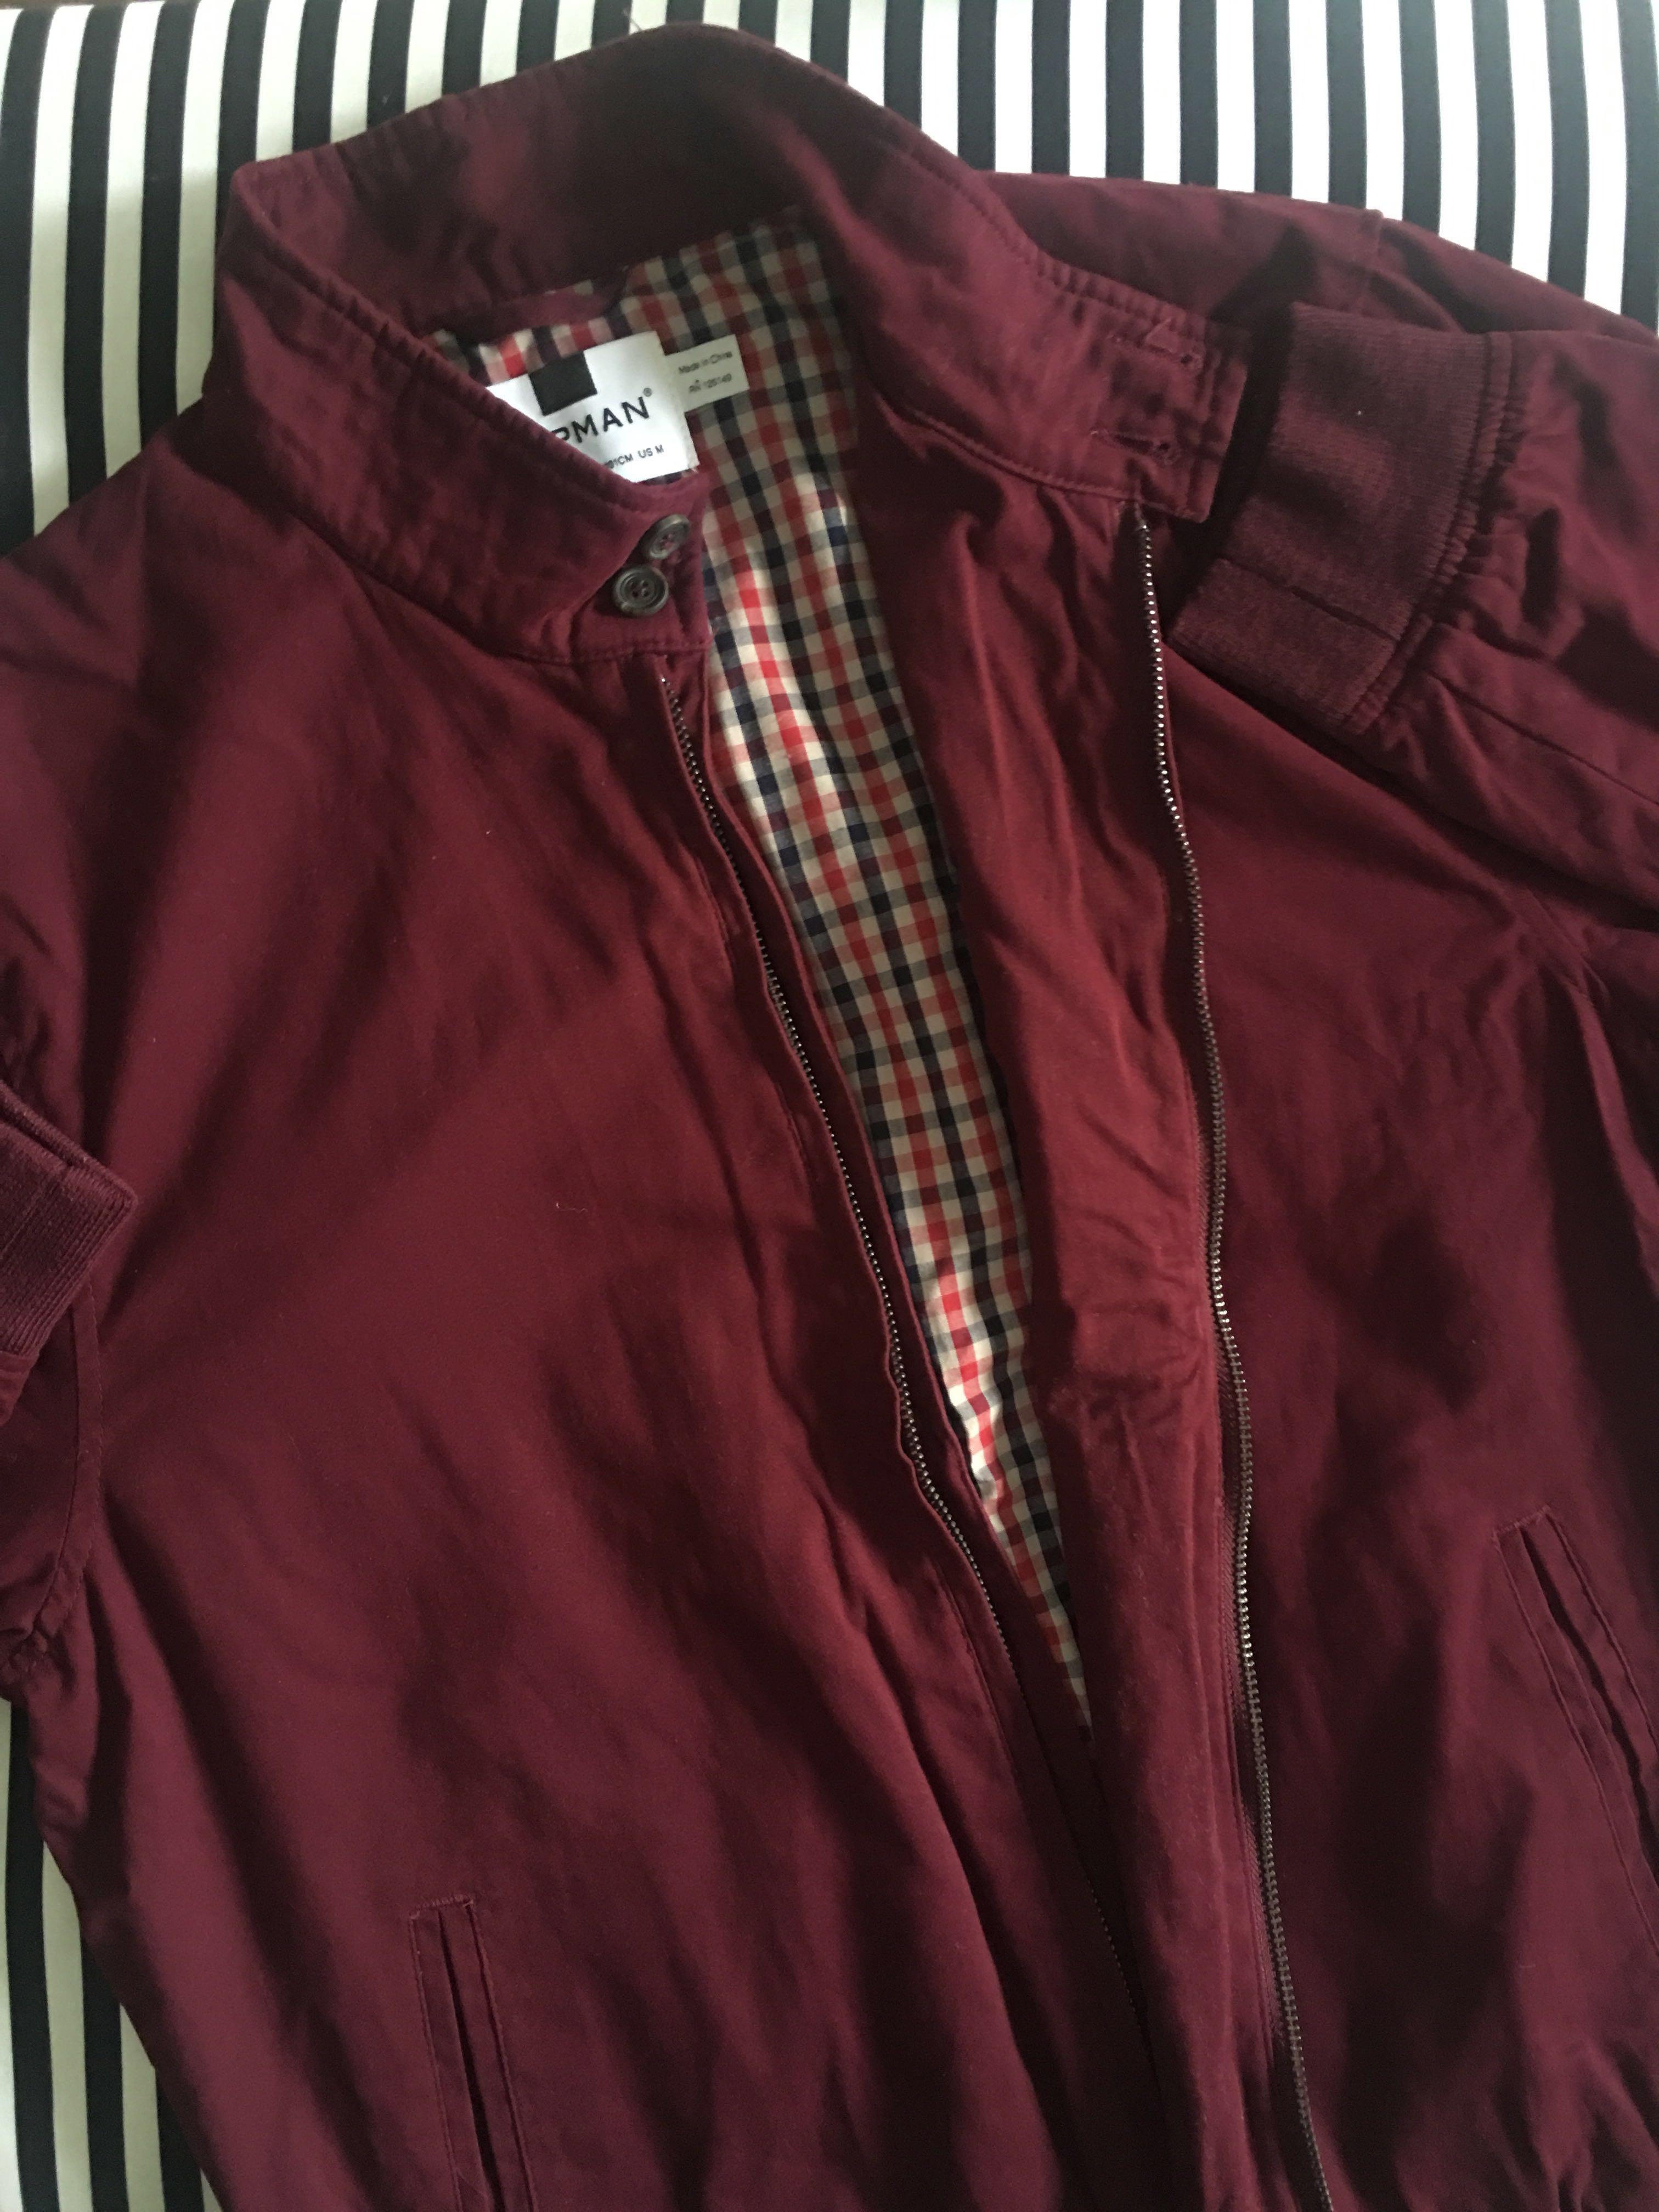 TOPMAN burgundy harrington jacket, Men's Fashion, Coats, Jackets and ...